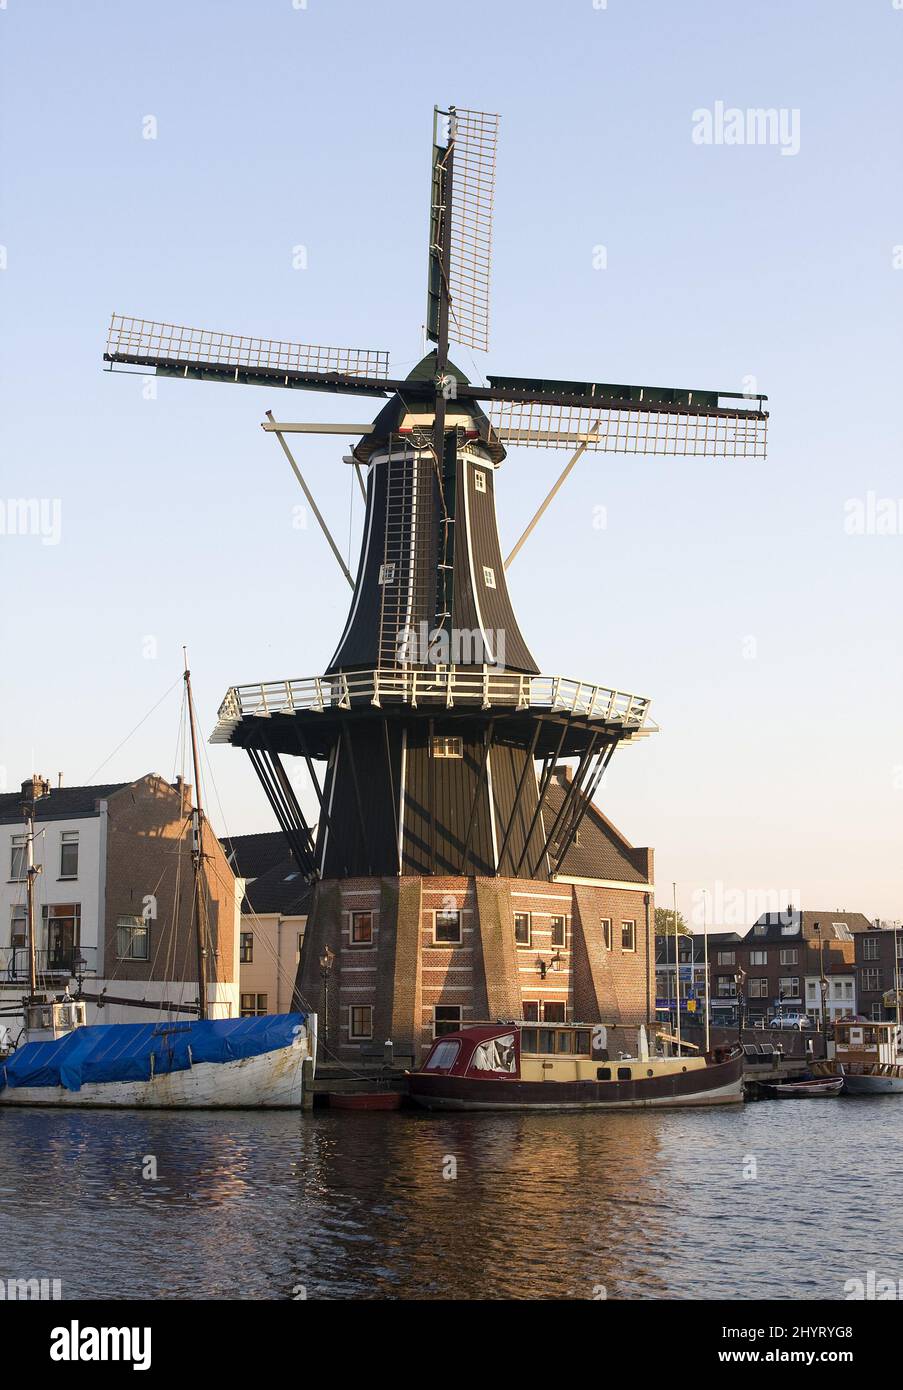 19 avril 2008 Haarlem, pays-Bas Windmills de Adriaan des pays-Bas Banque D'Images